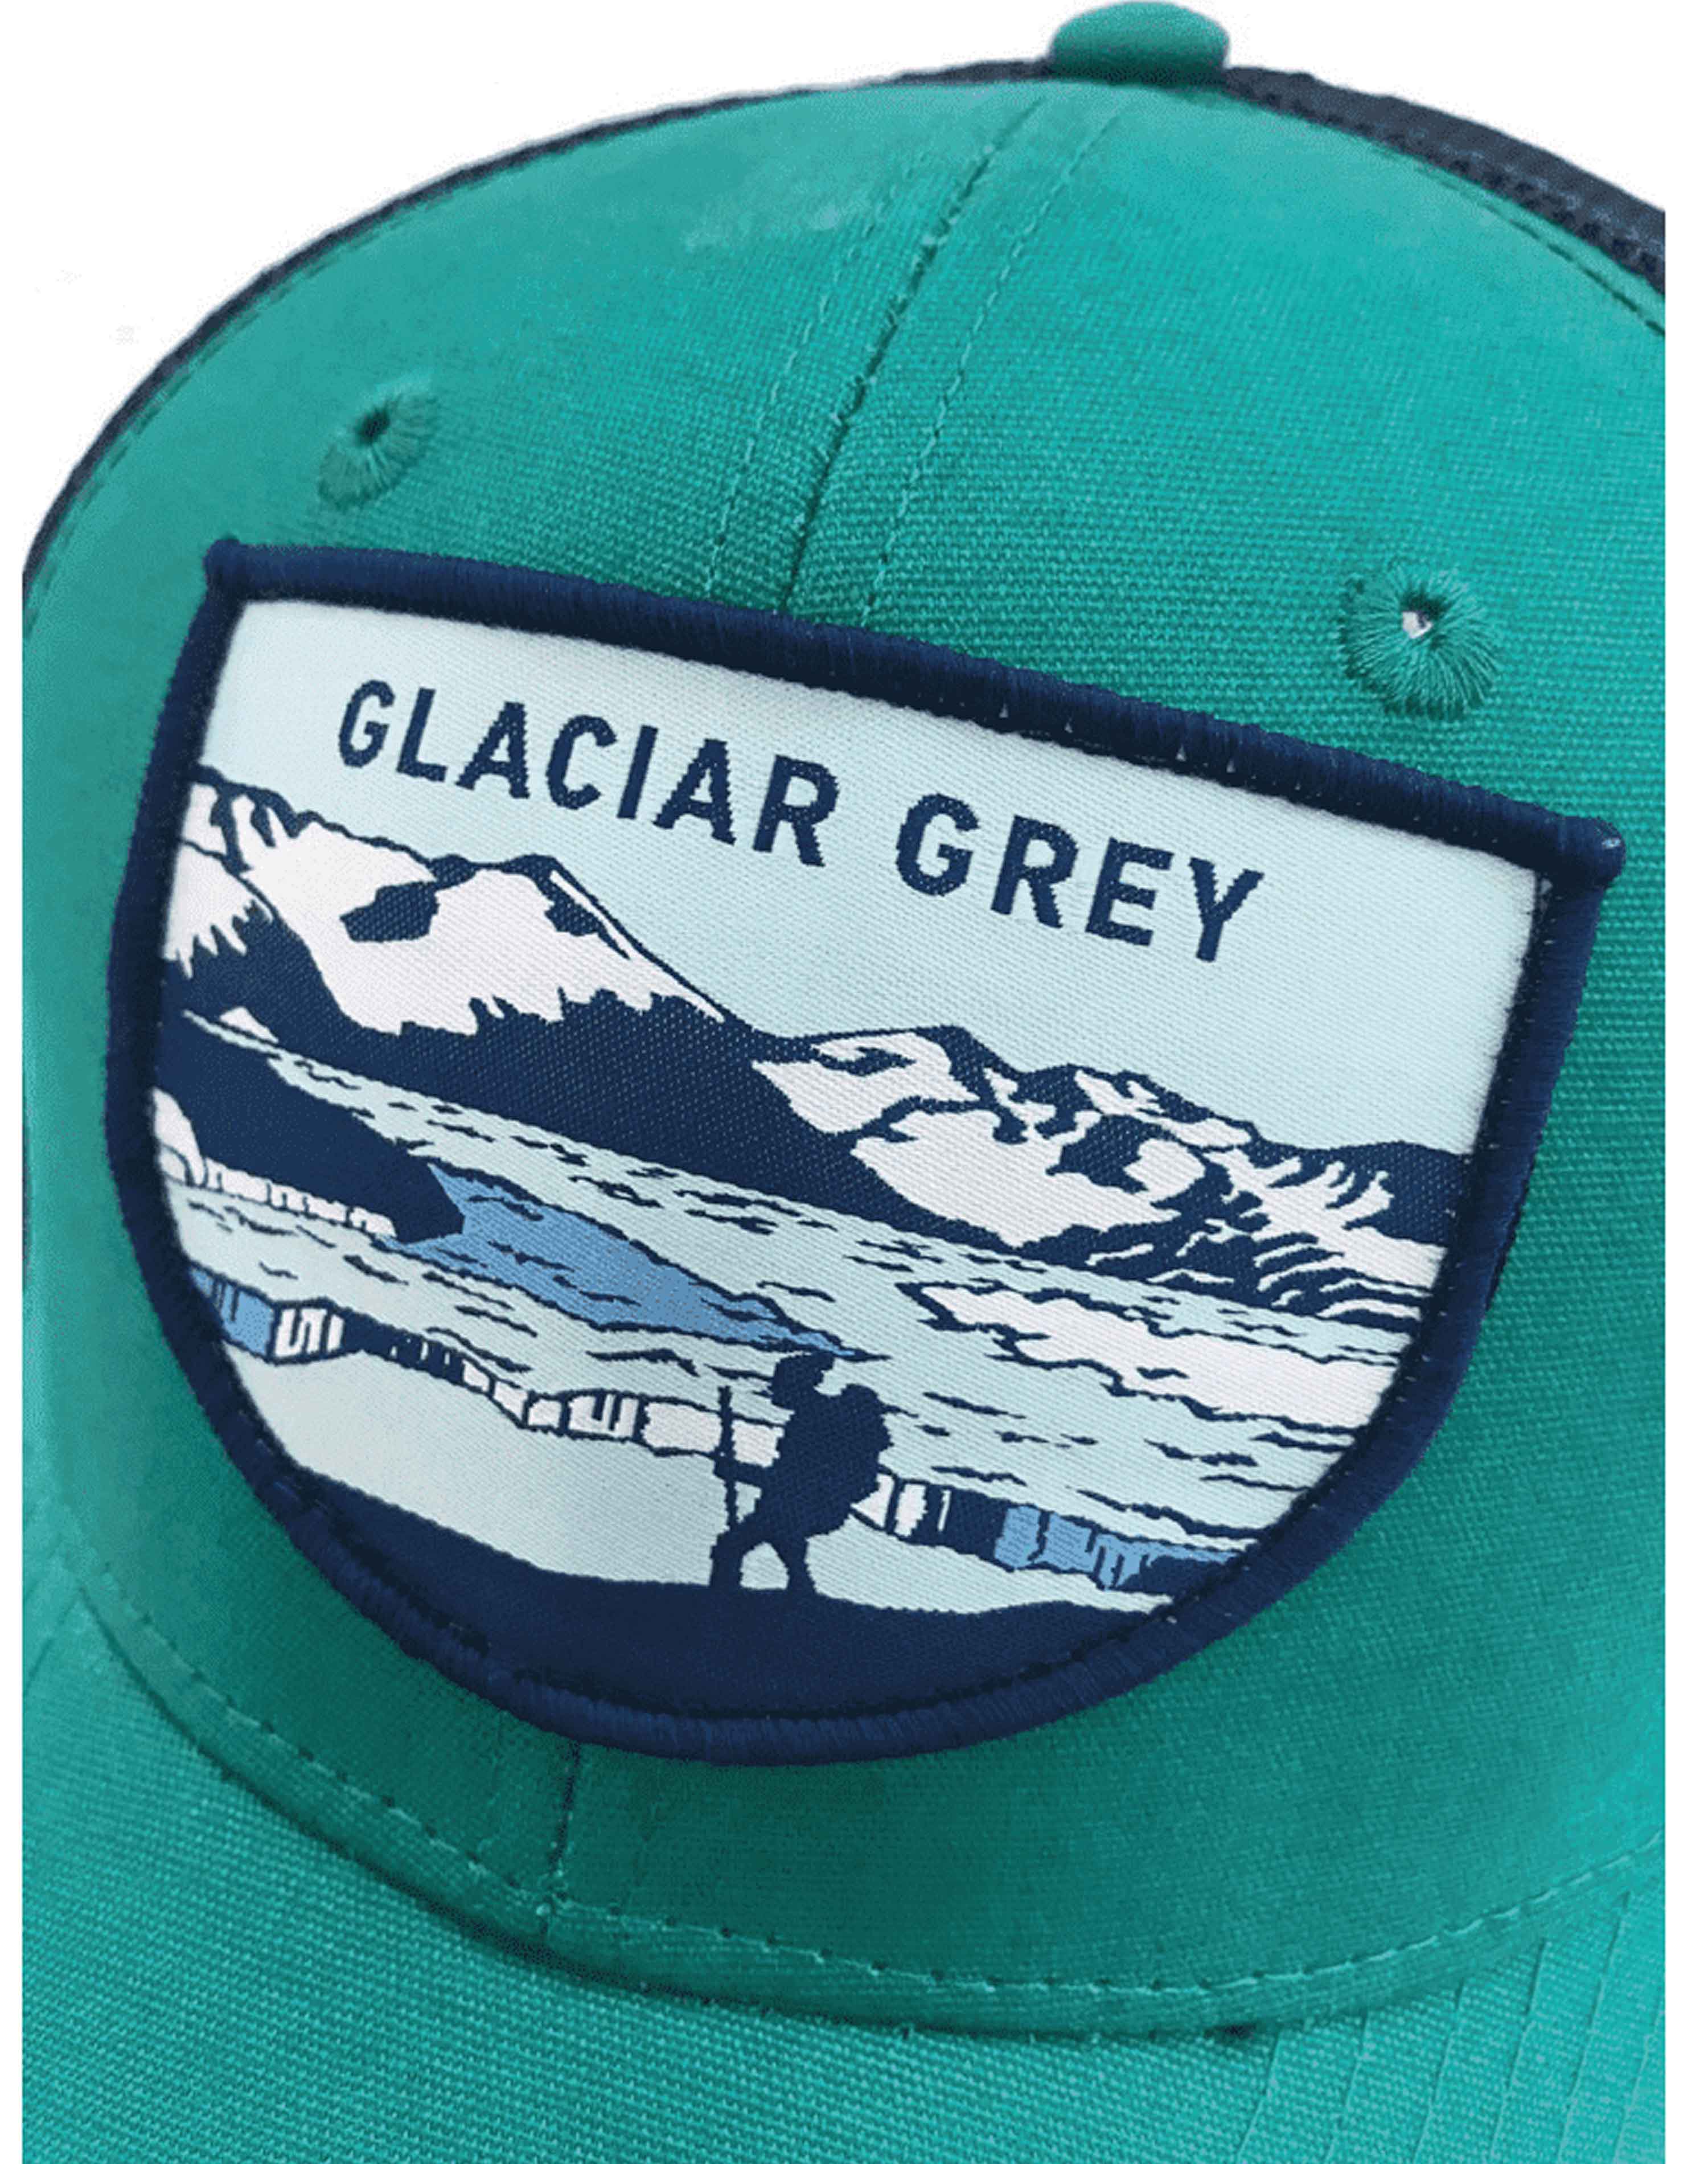 Jockey Trucker - Glaciar Grey